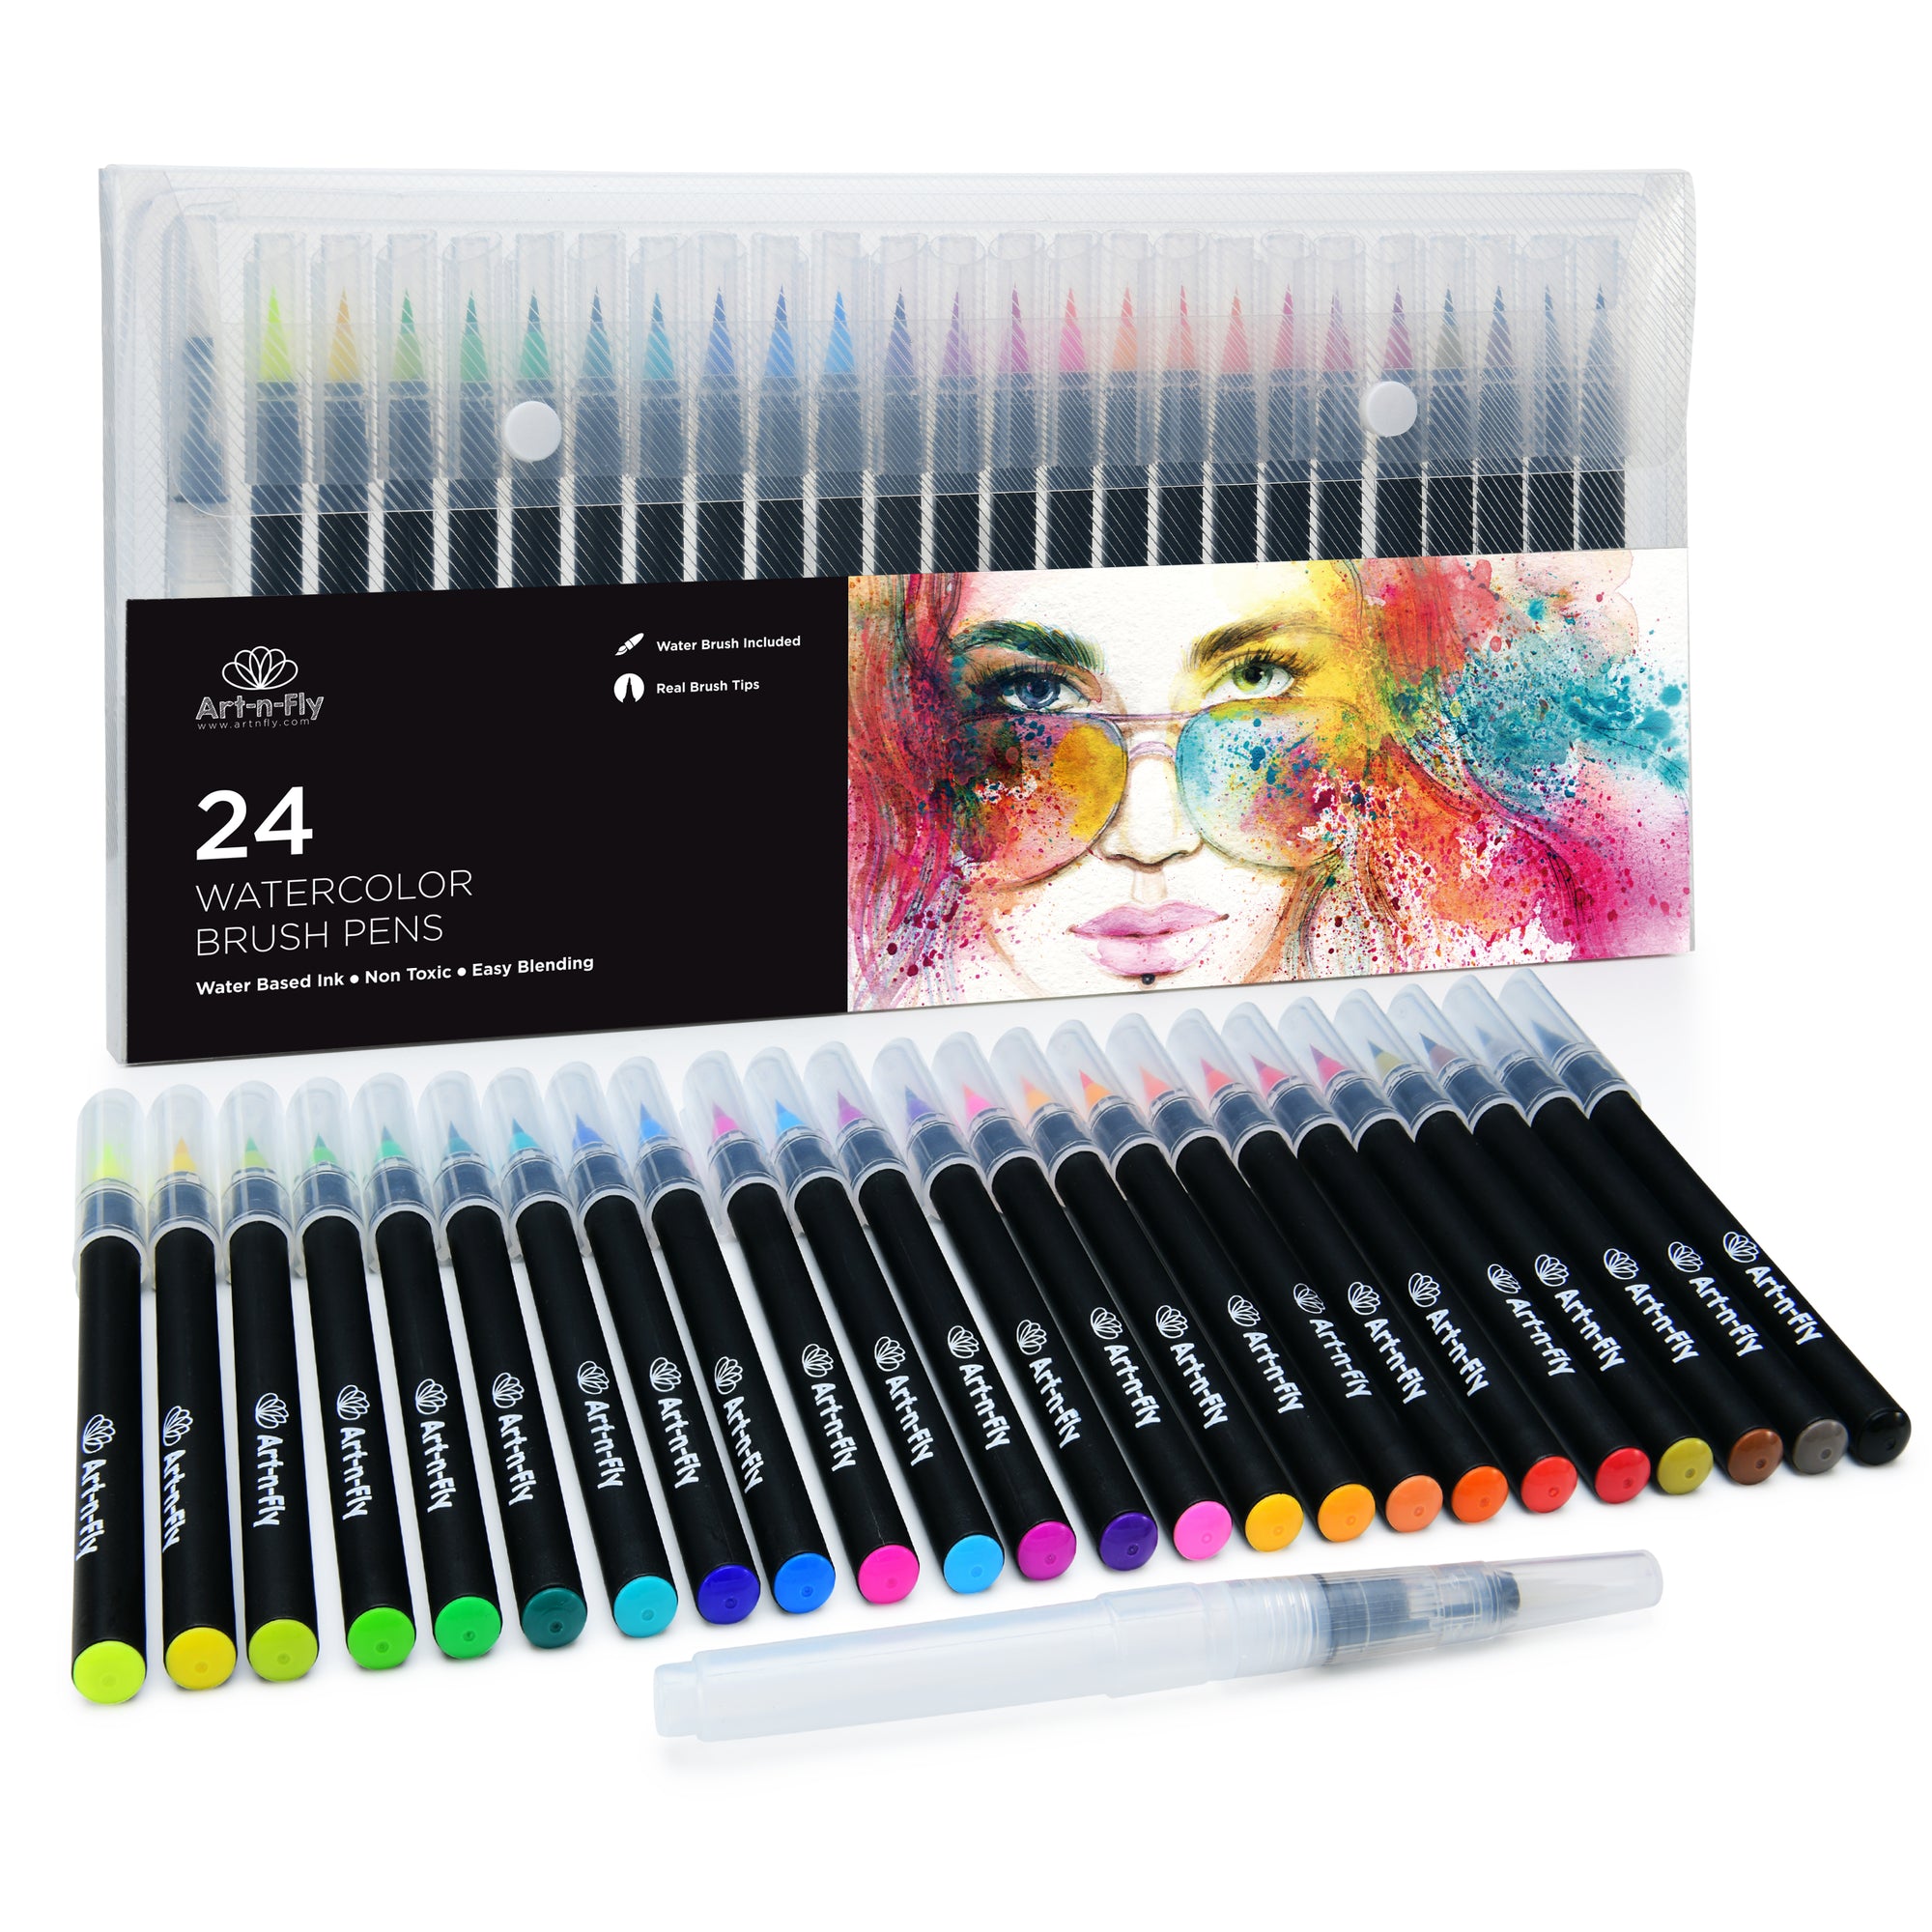 24 Watercolor Paint Brush Pens - Art-N-Fly